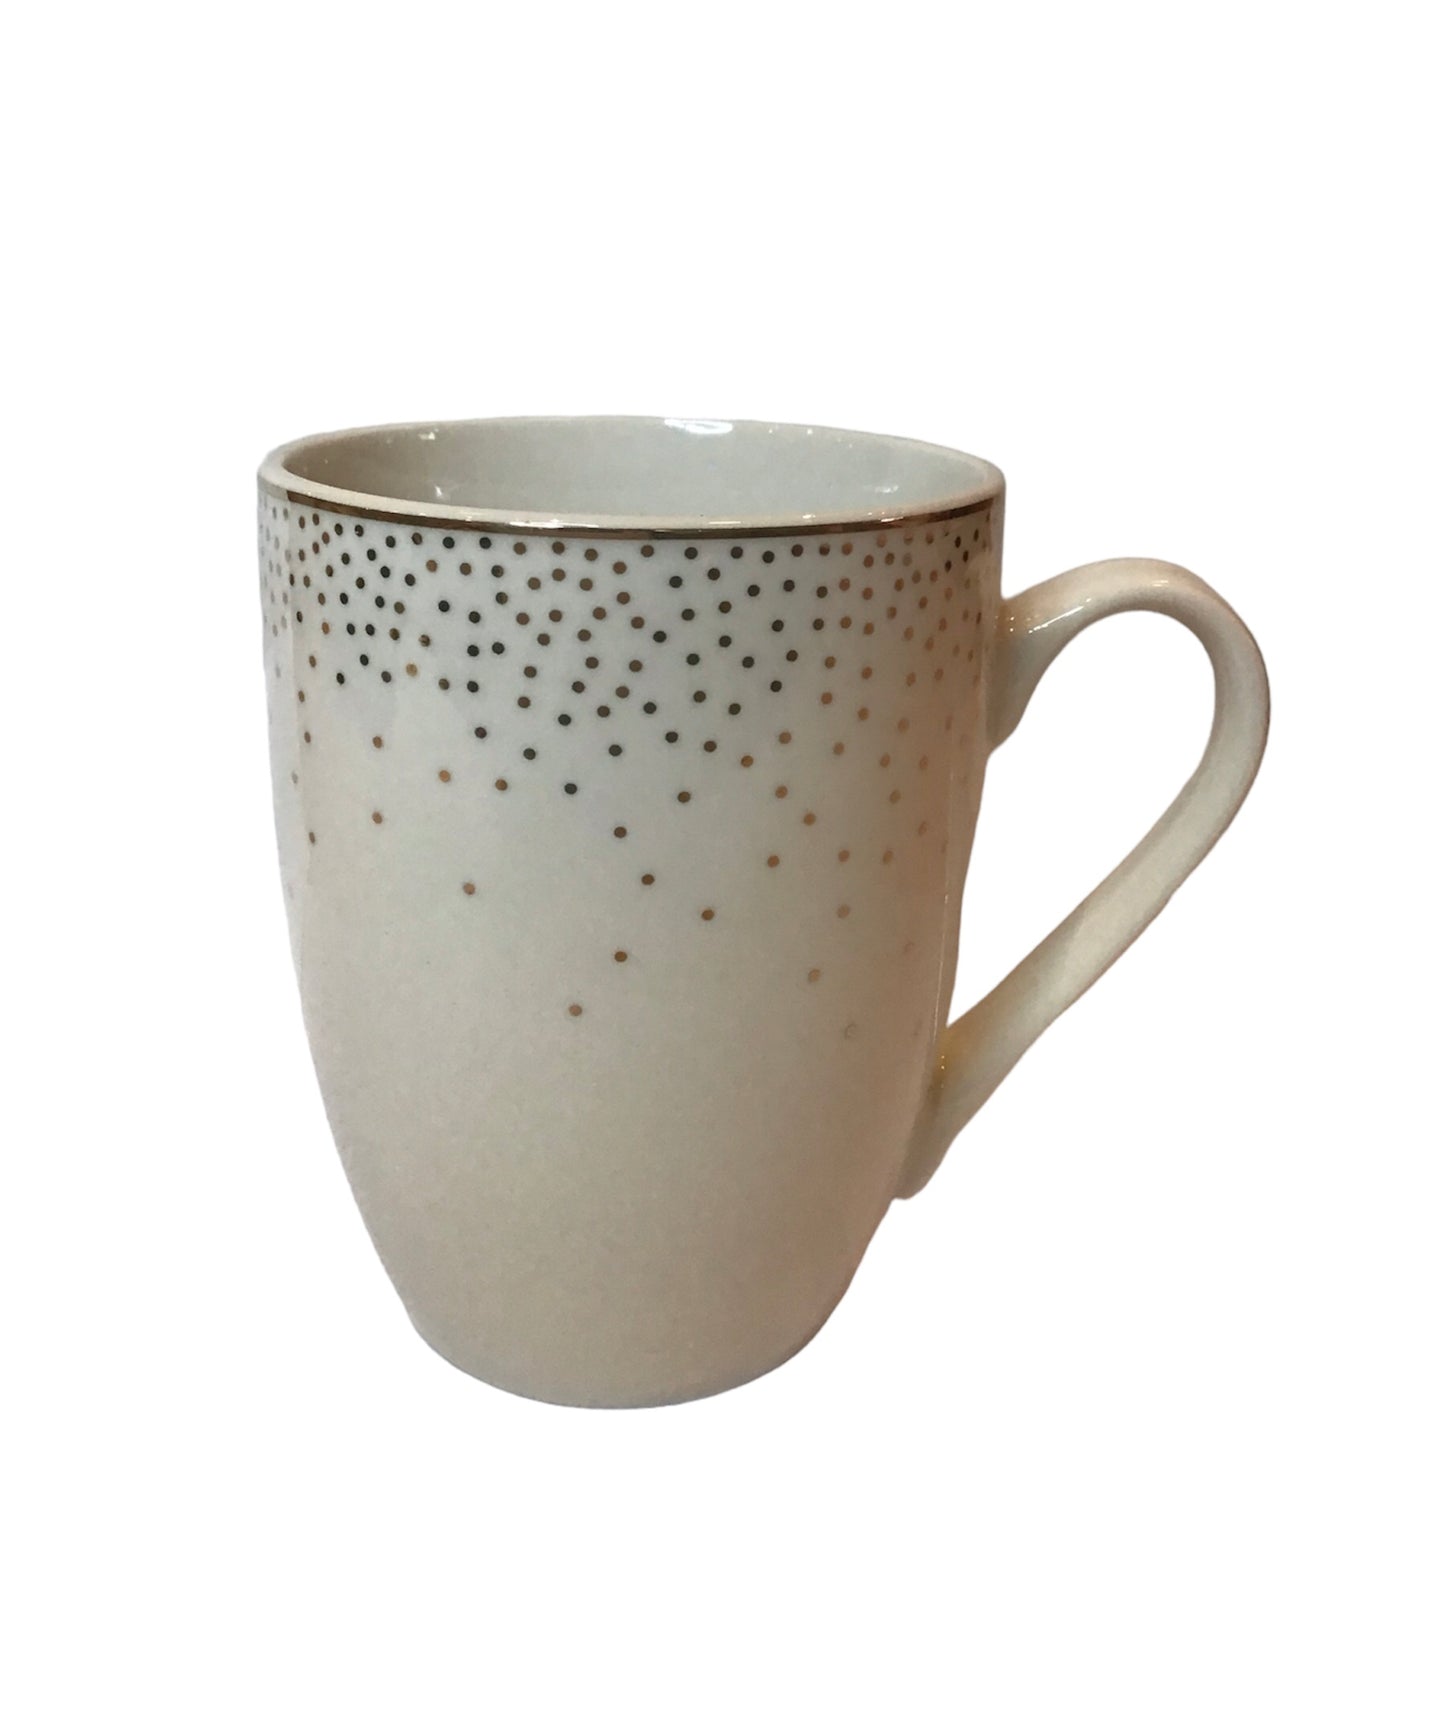 White Ceramic Mug With Golden Details